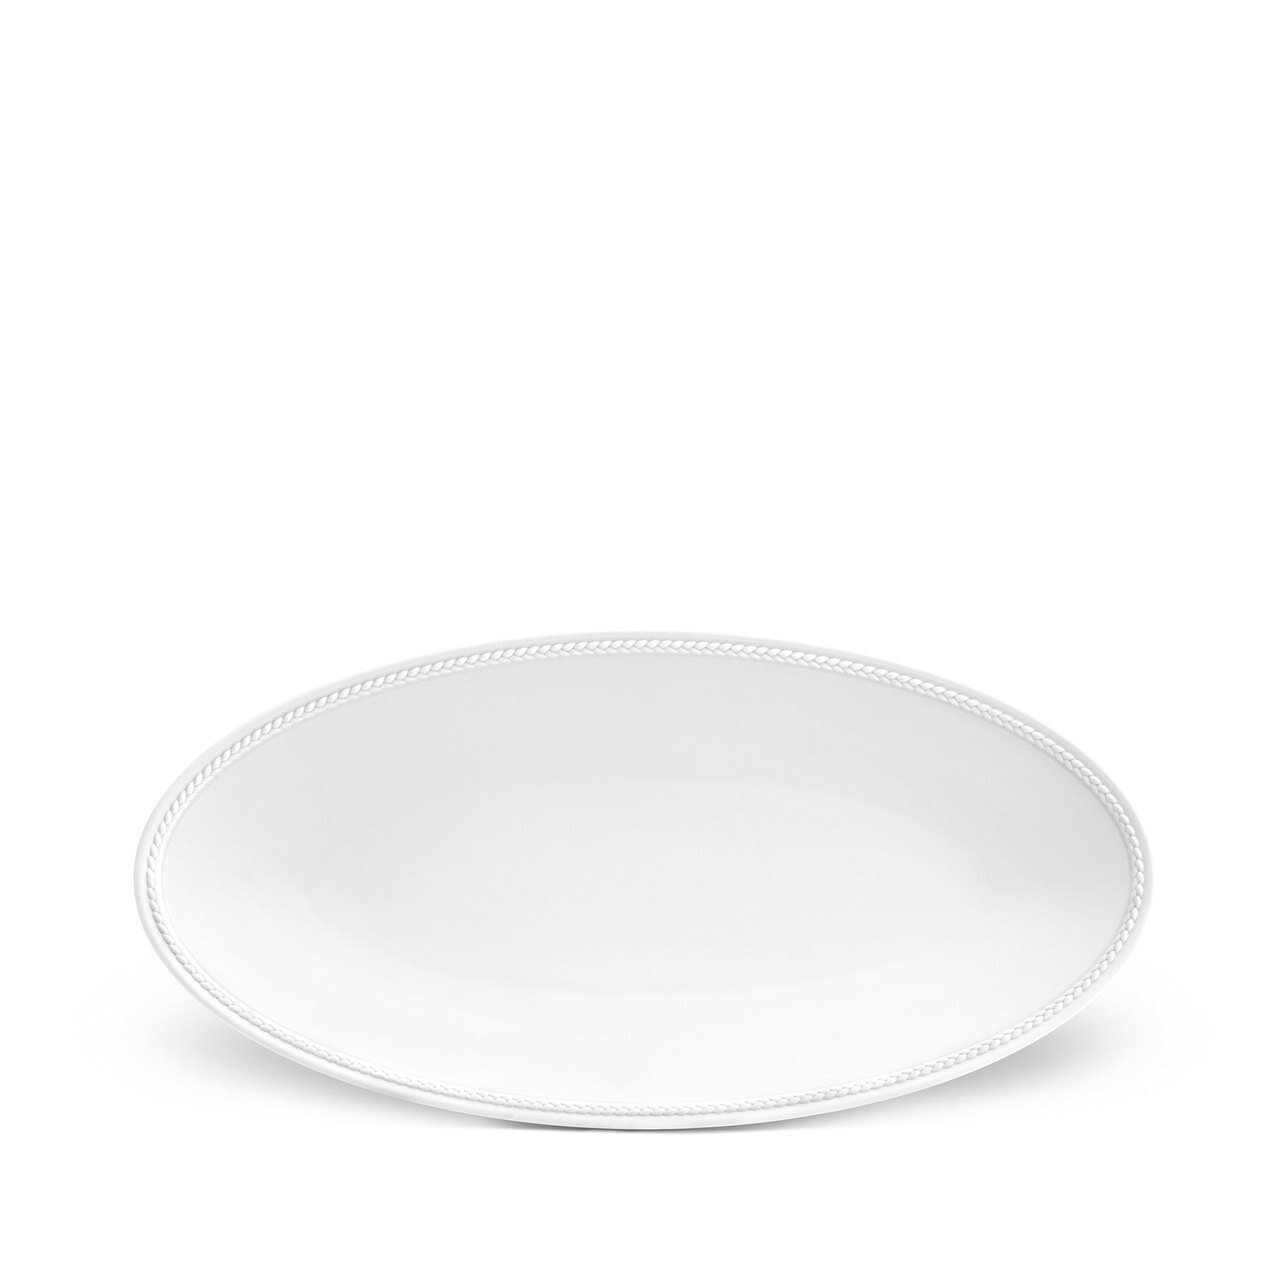 L'Objet Soie Tressee Small Oval Platter White